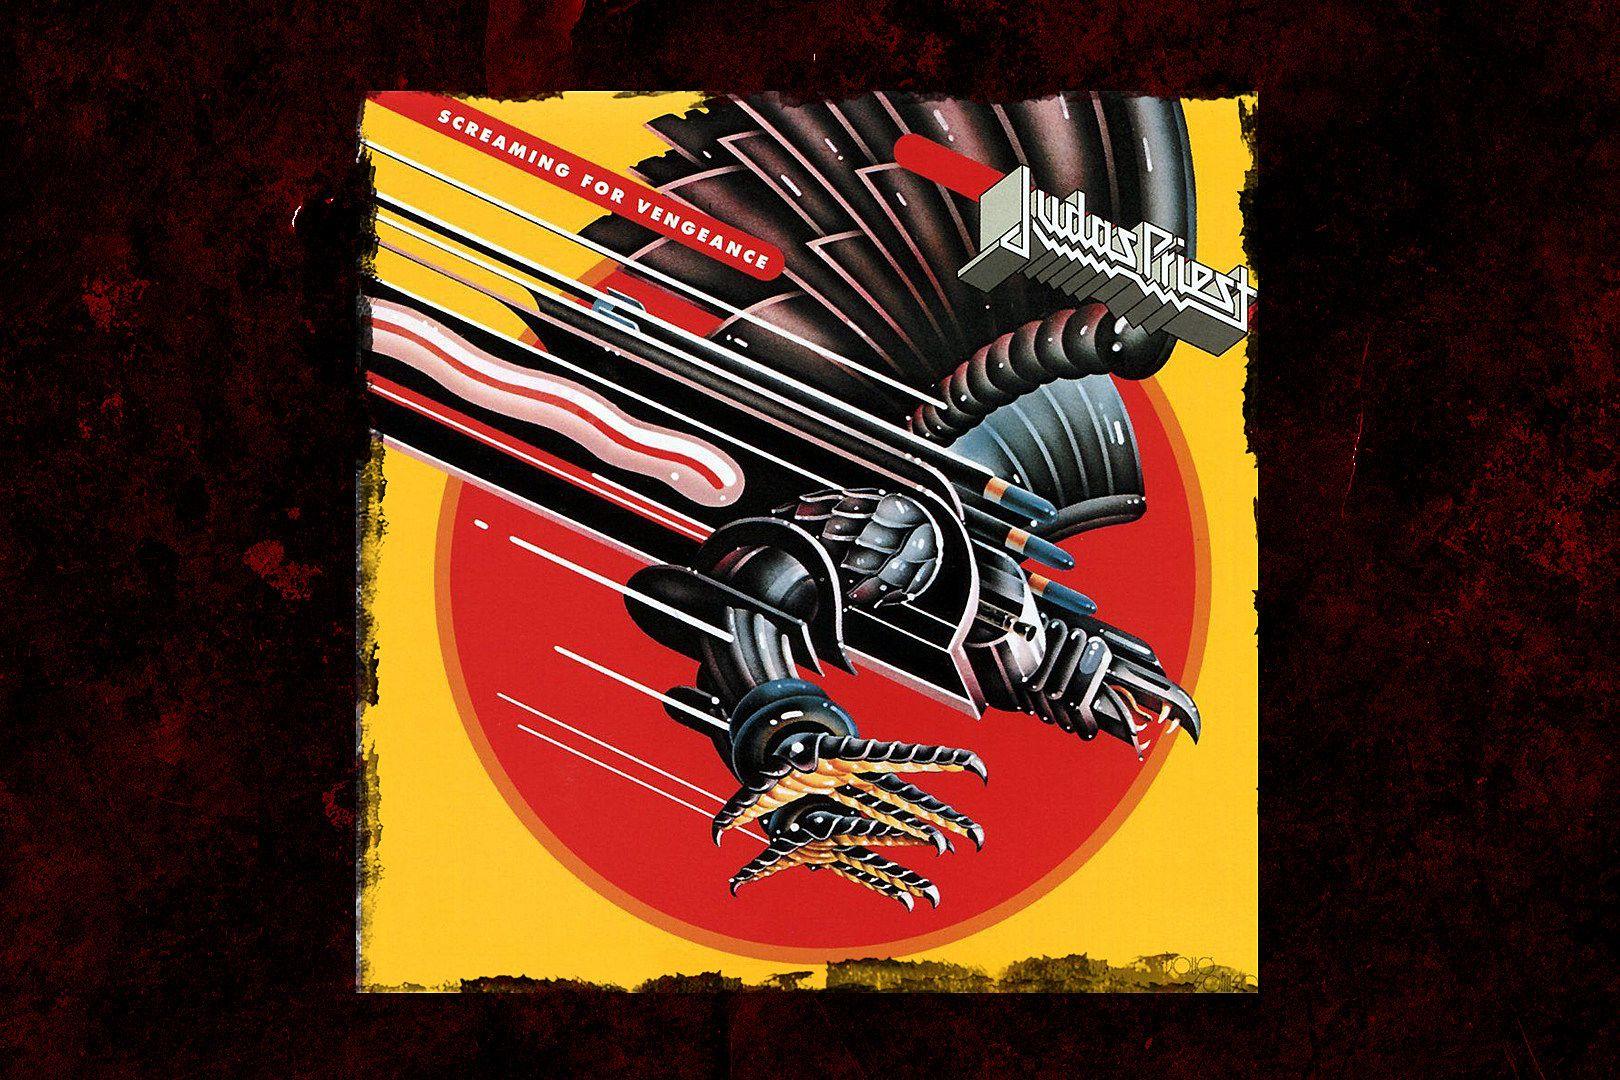 Judas Priest Original Logo - Years Ago: Judas Priest Release 'Screaming for Vengeance'